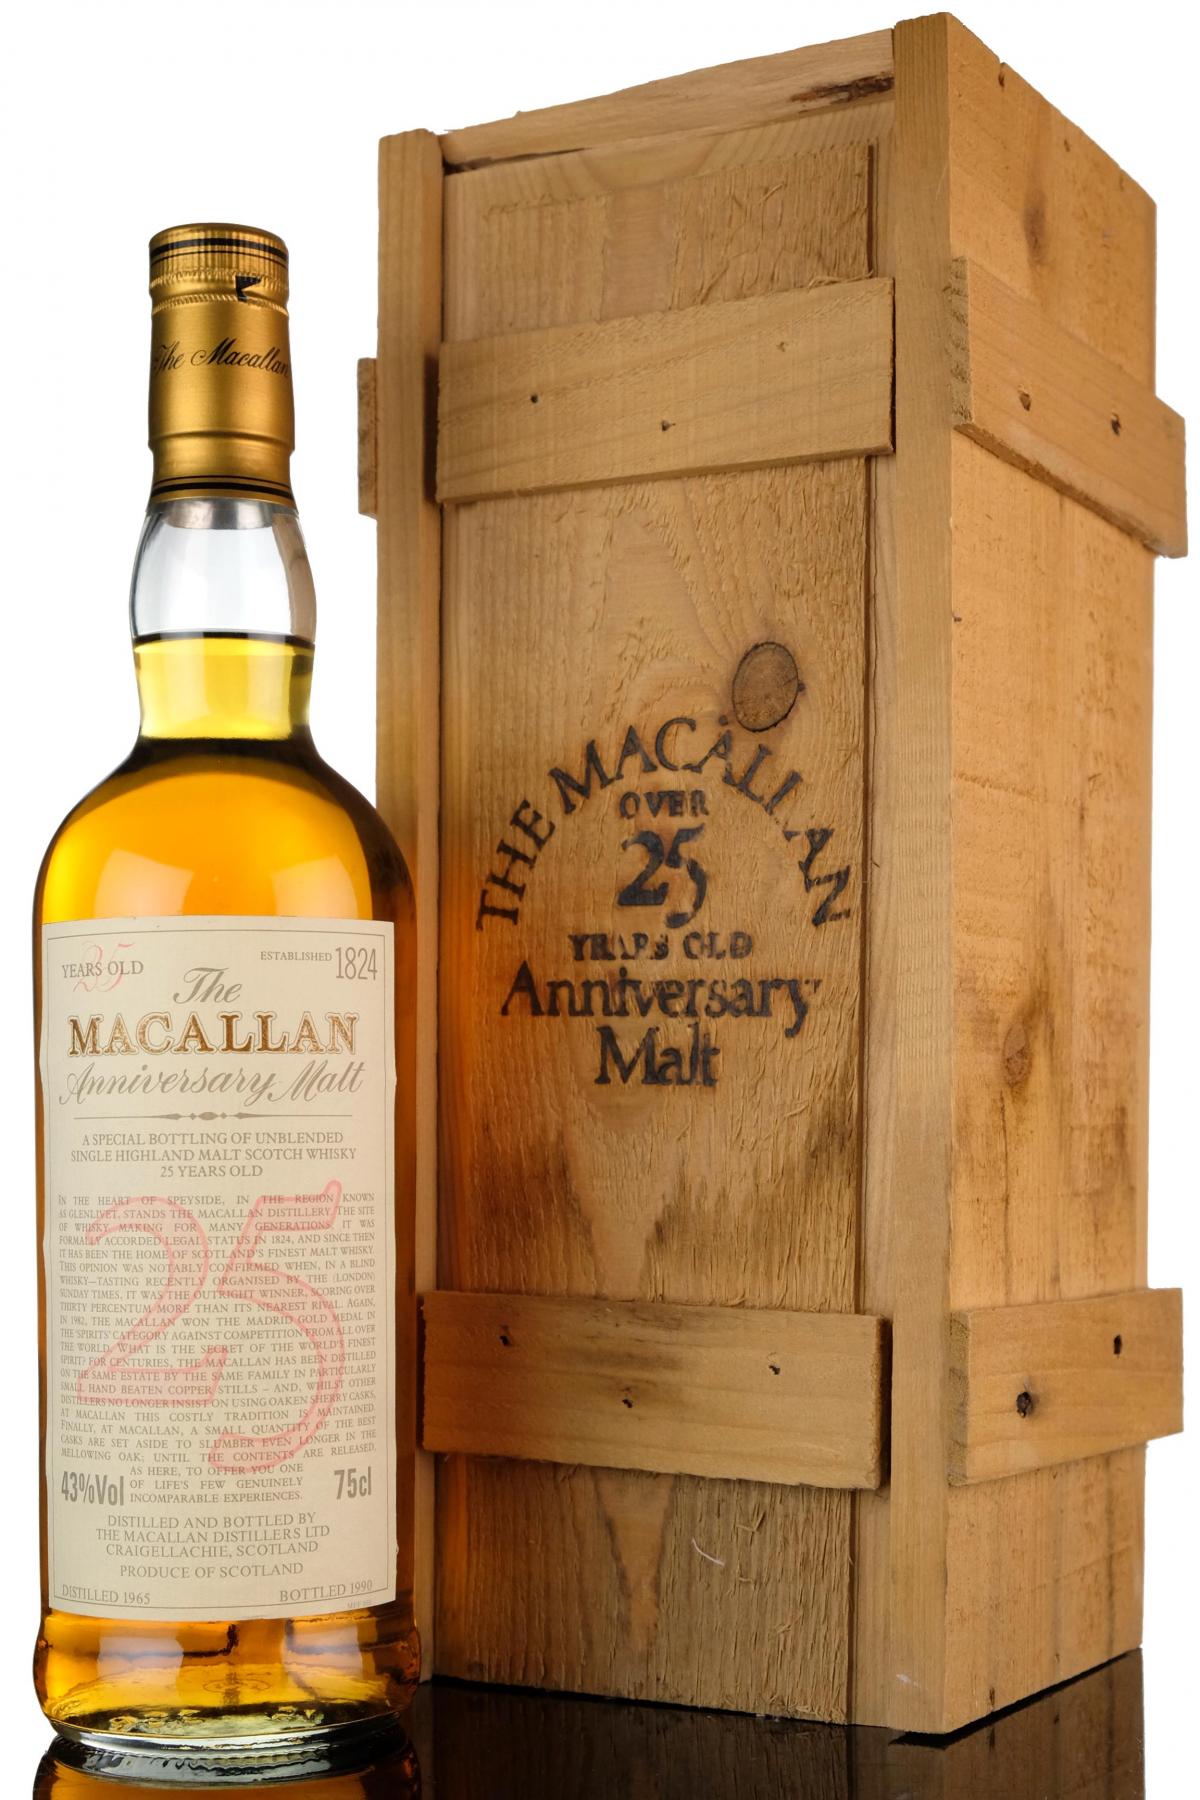 Macallan 1965-1990 - 25 Year Old Anniversary Malt